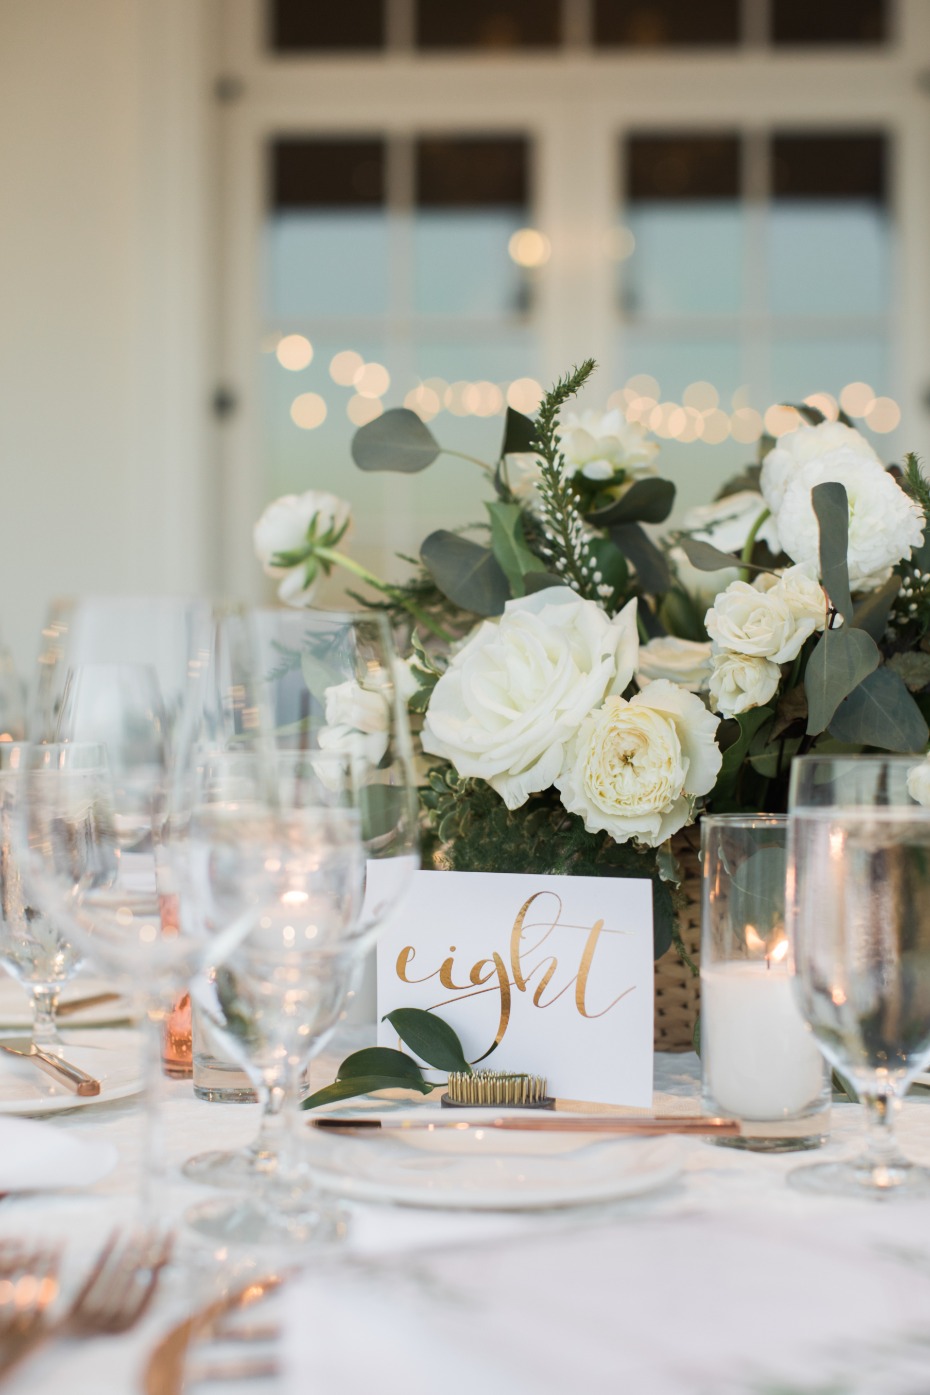 Elegant table decor for the reception